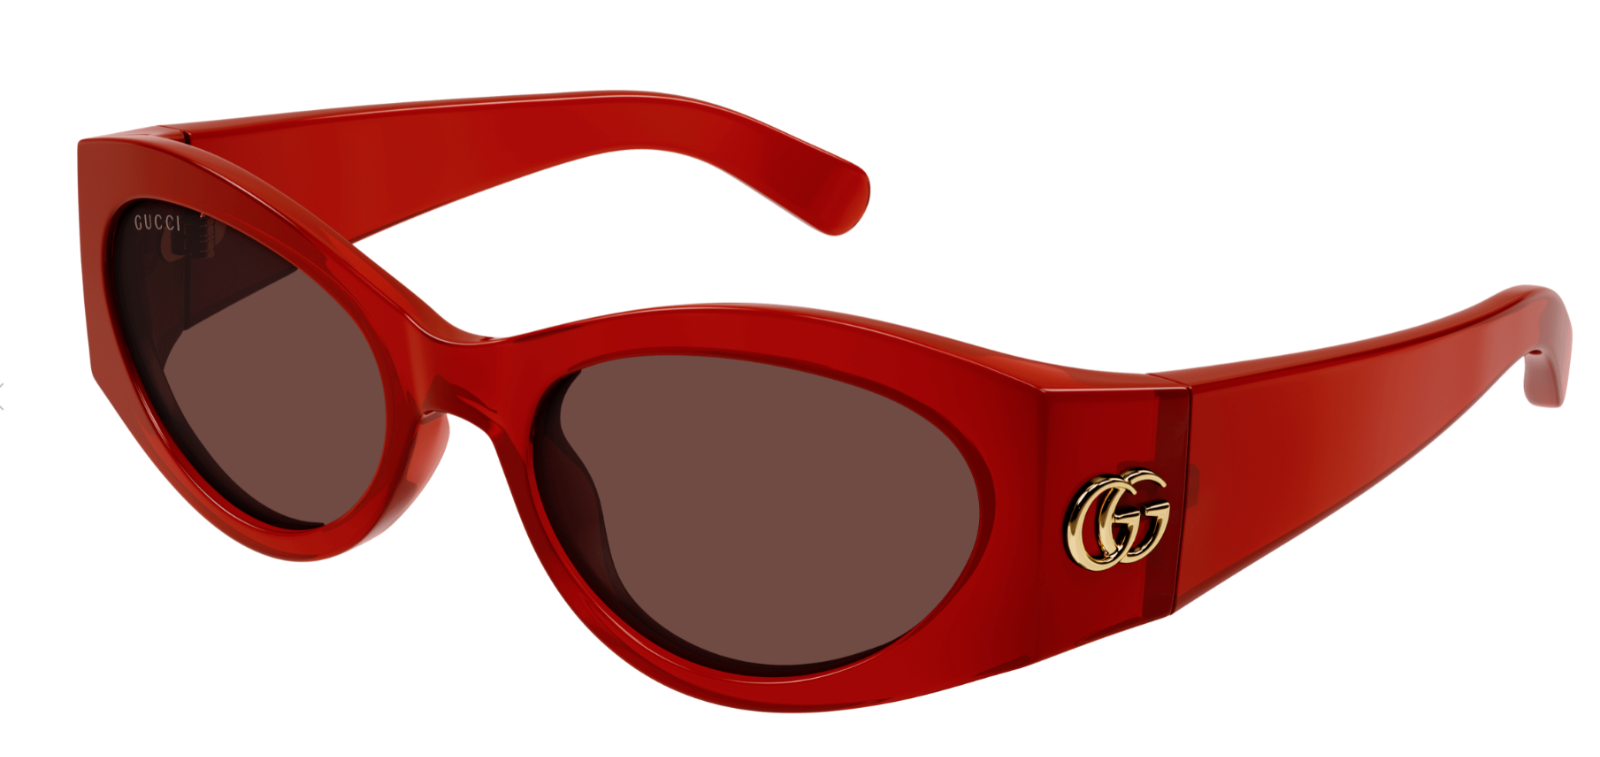 Gucci GG1401S-003 Red/Brown Cat-eye Women's Sunglasses